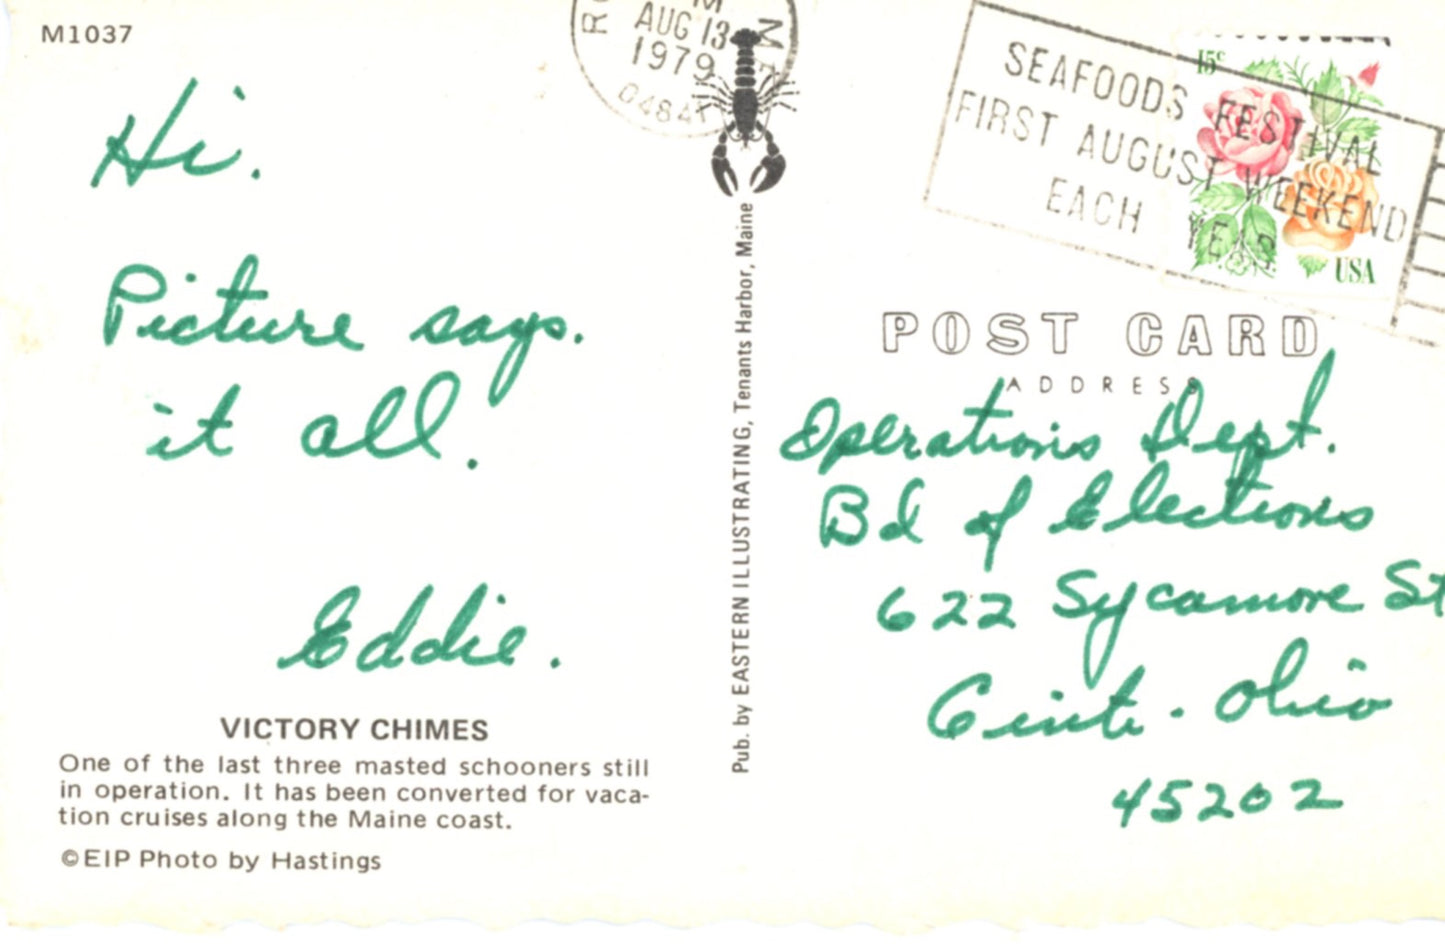 Victory Chimes Schooner, MAINE COAST Vintage Postcard ©1970's Posted